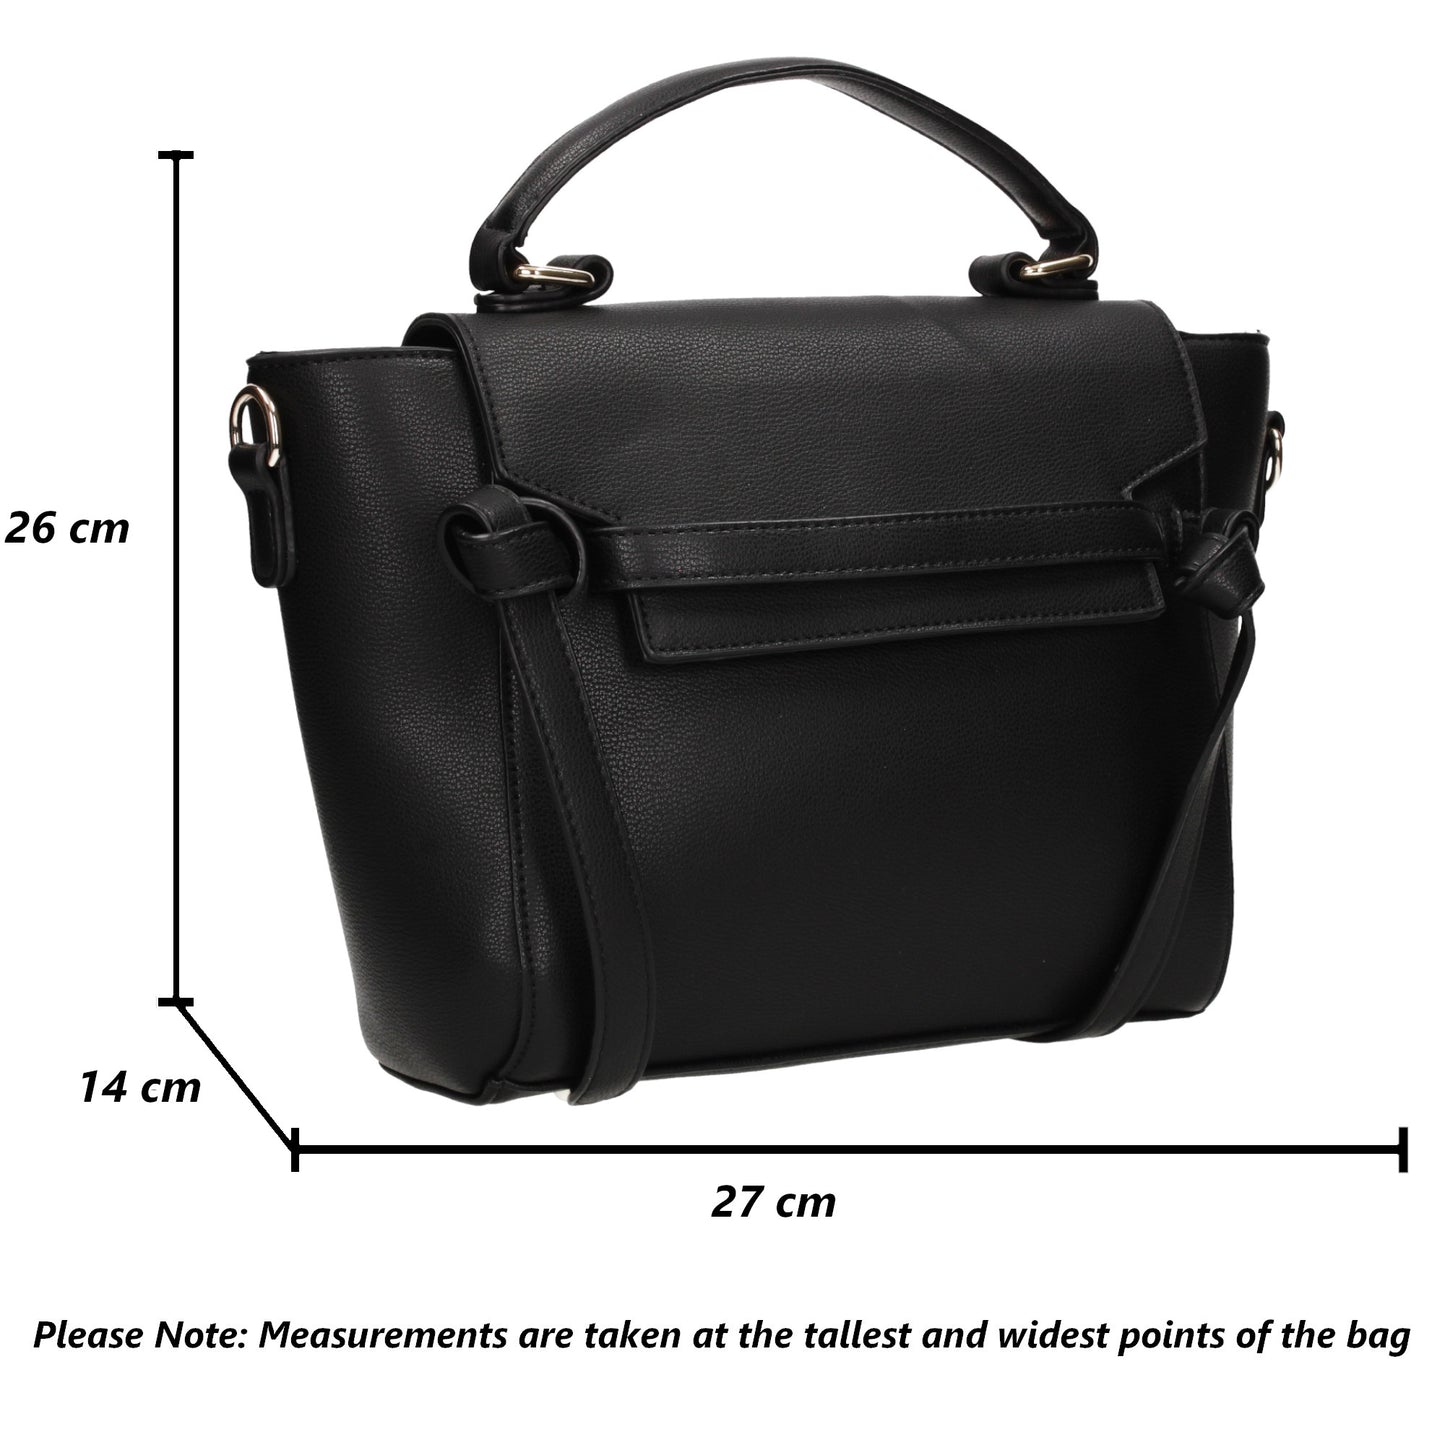 Buy your Juana Handbag Black Today! Buy with confidence from Swankyswans